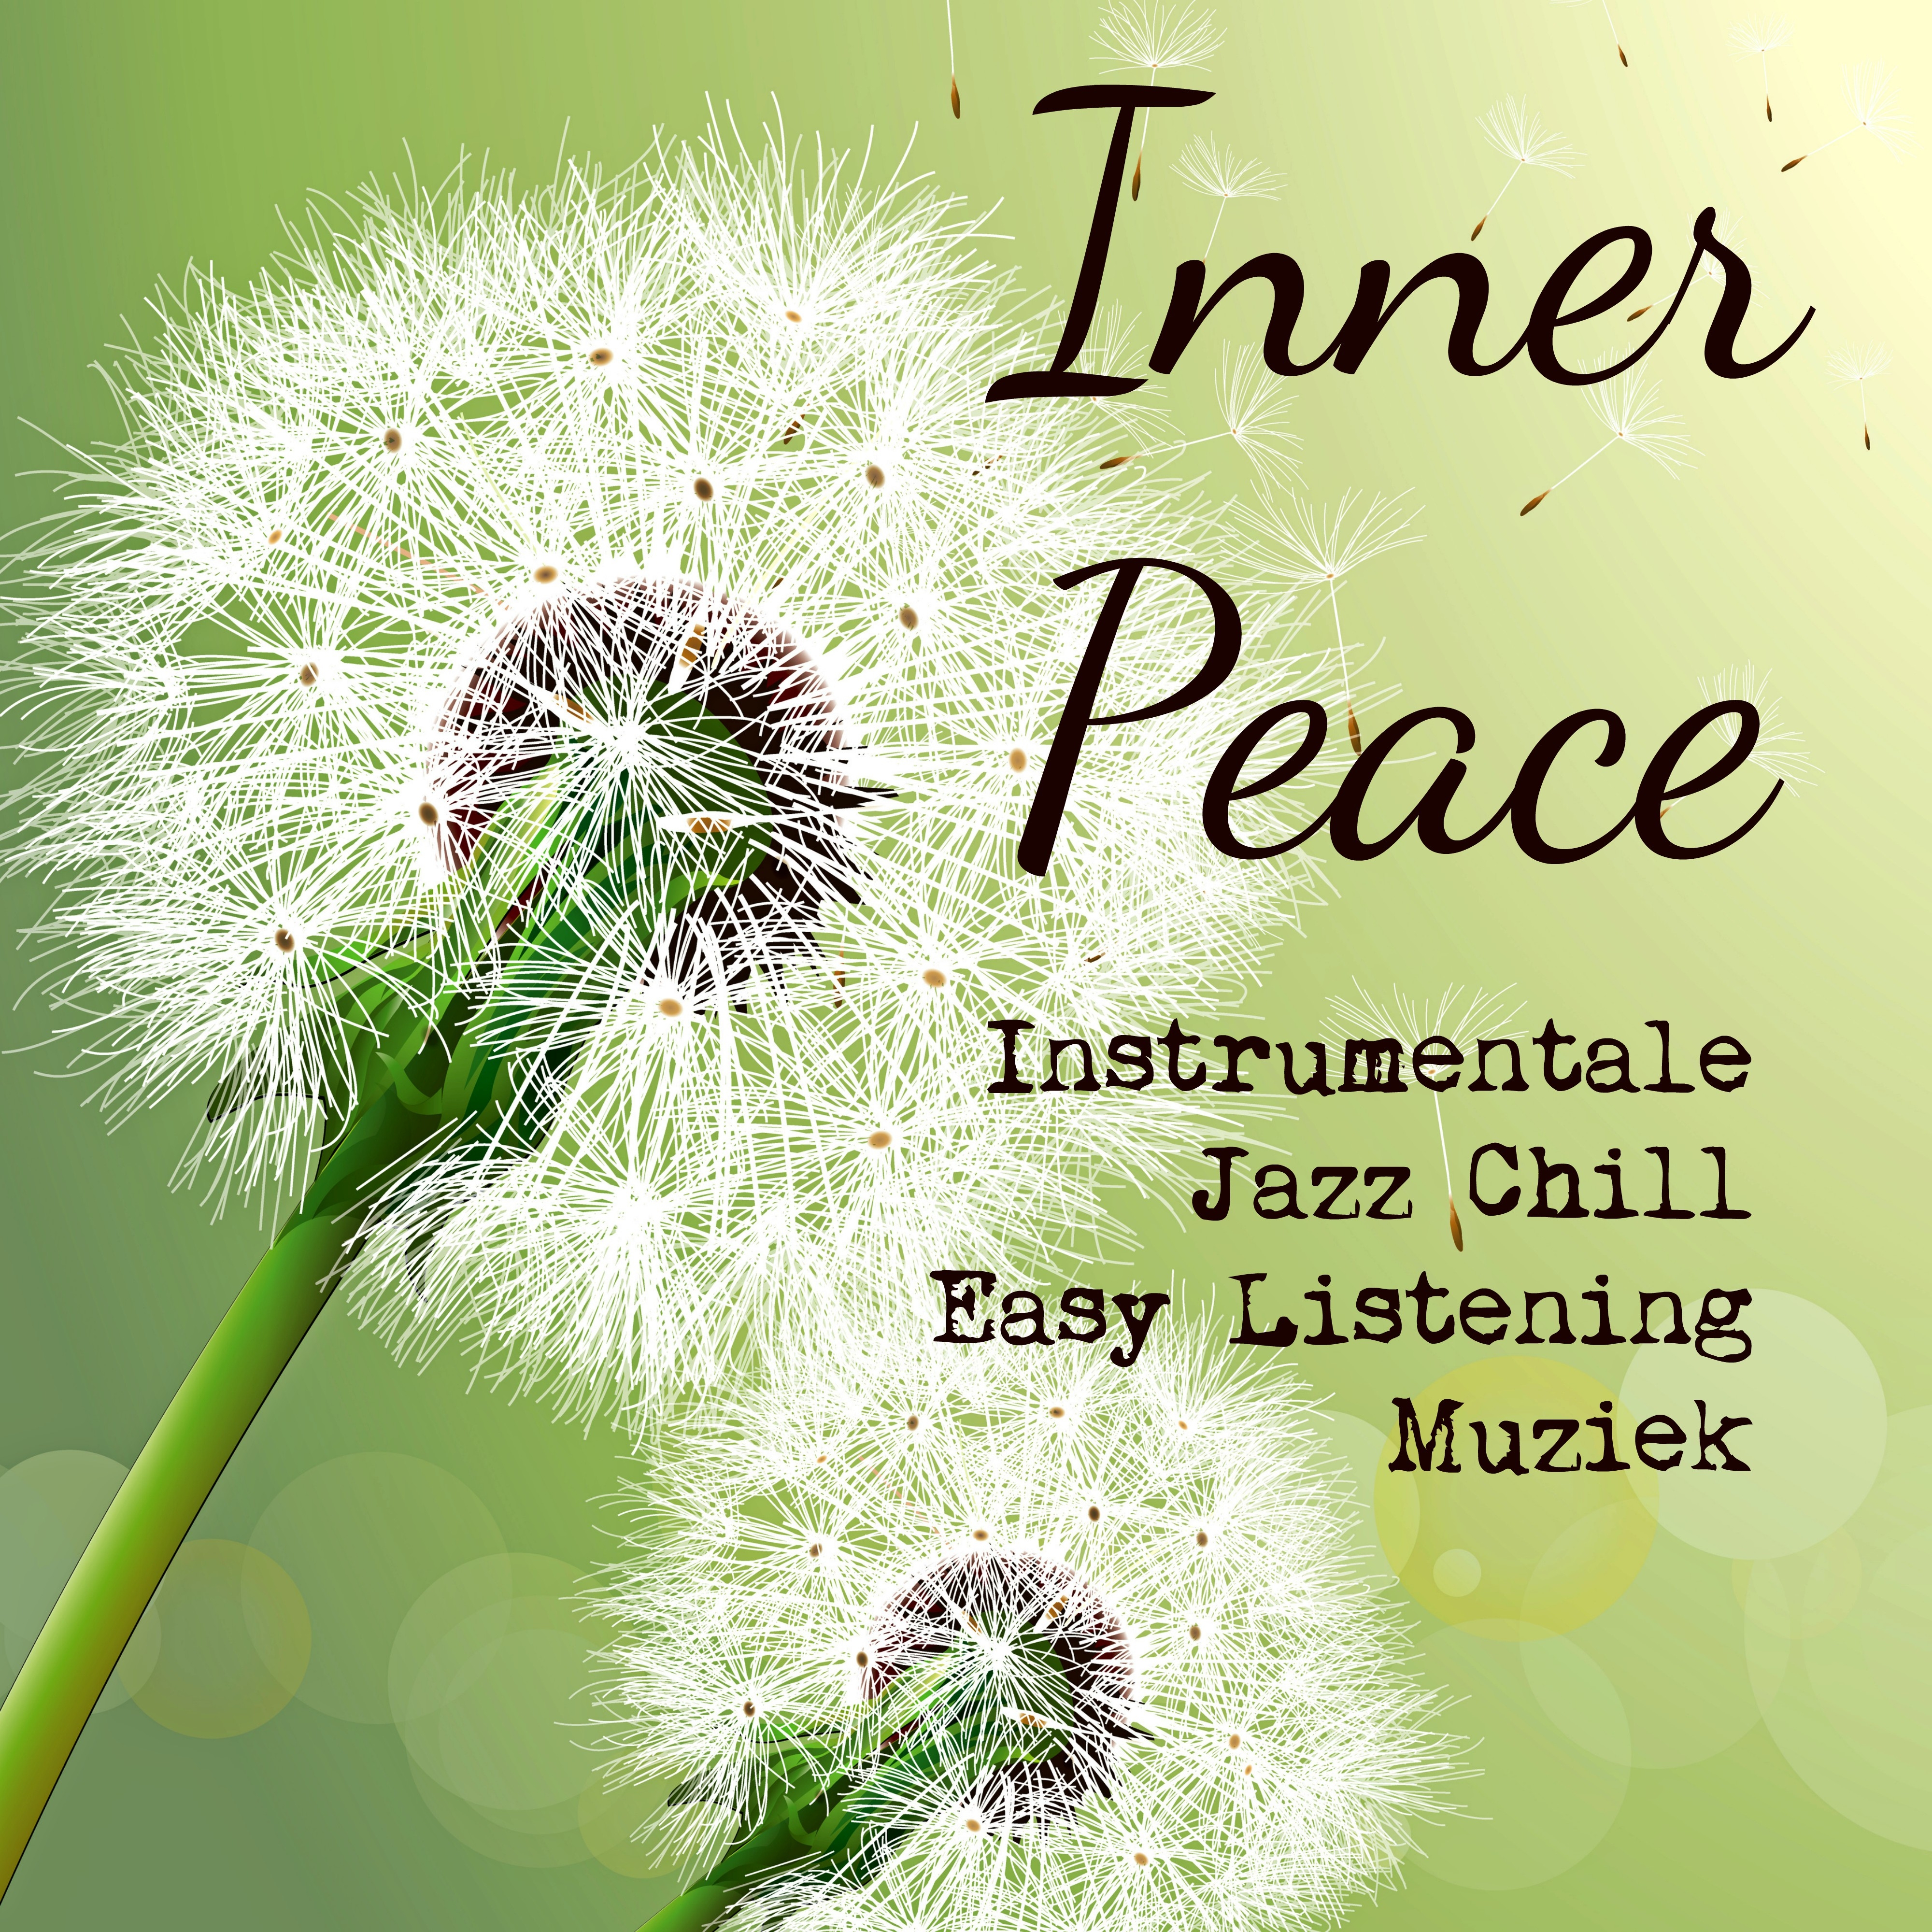 Inner Peace - Instrumentale Jazz Chillout Easy Listening Muziek voor Diepe Ontspanning en Spirituele Genezing